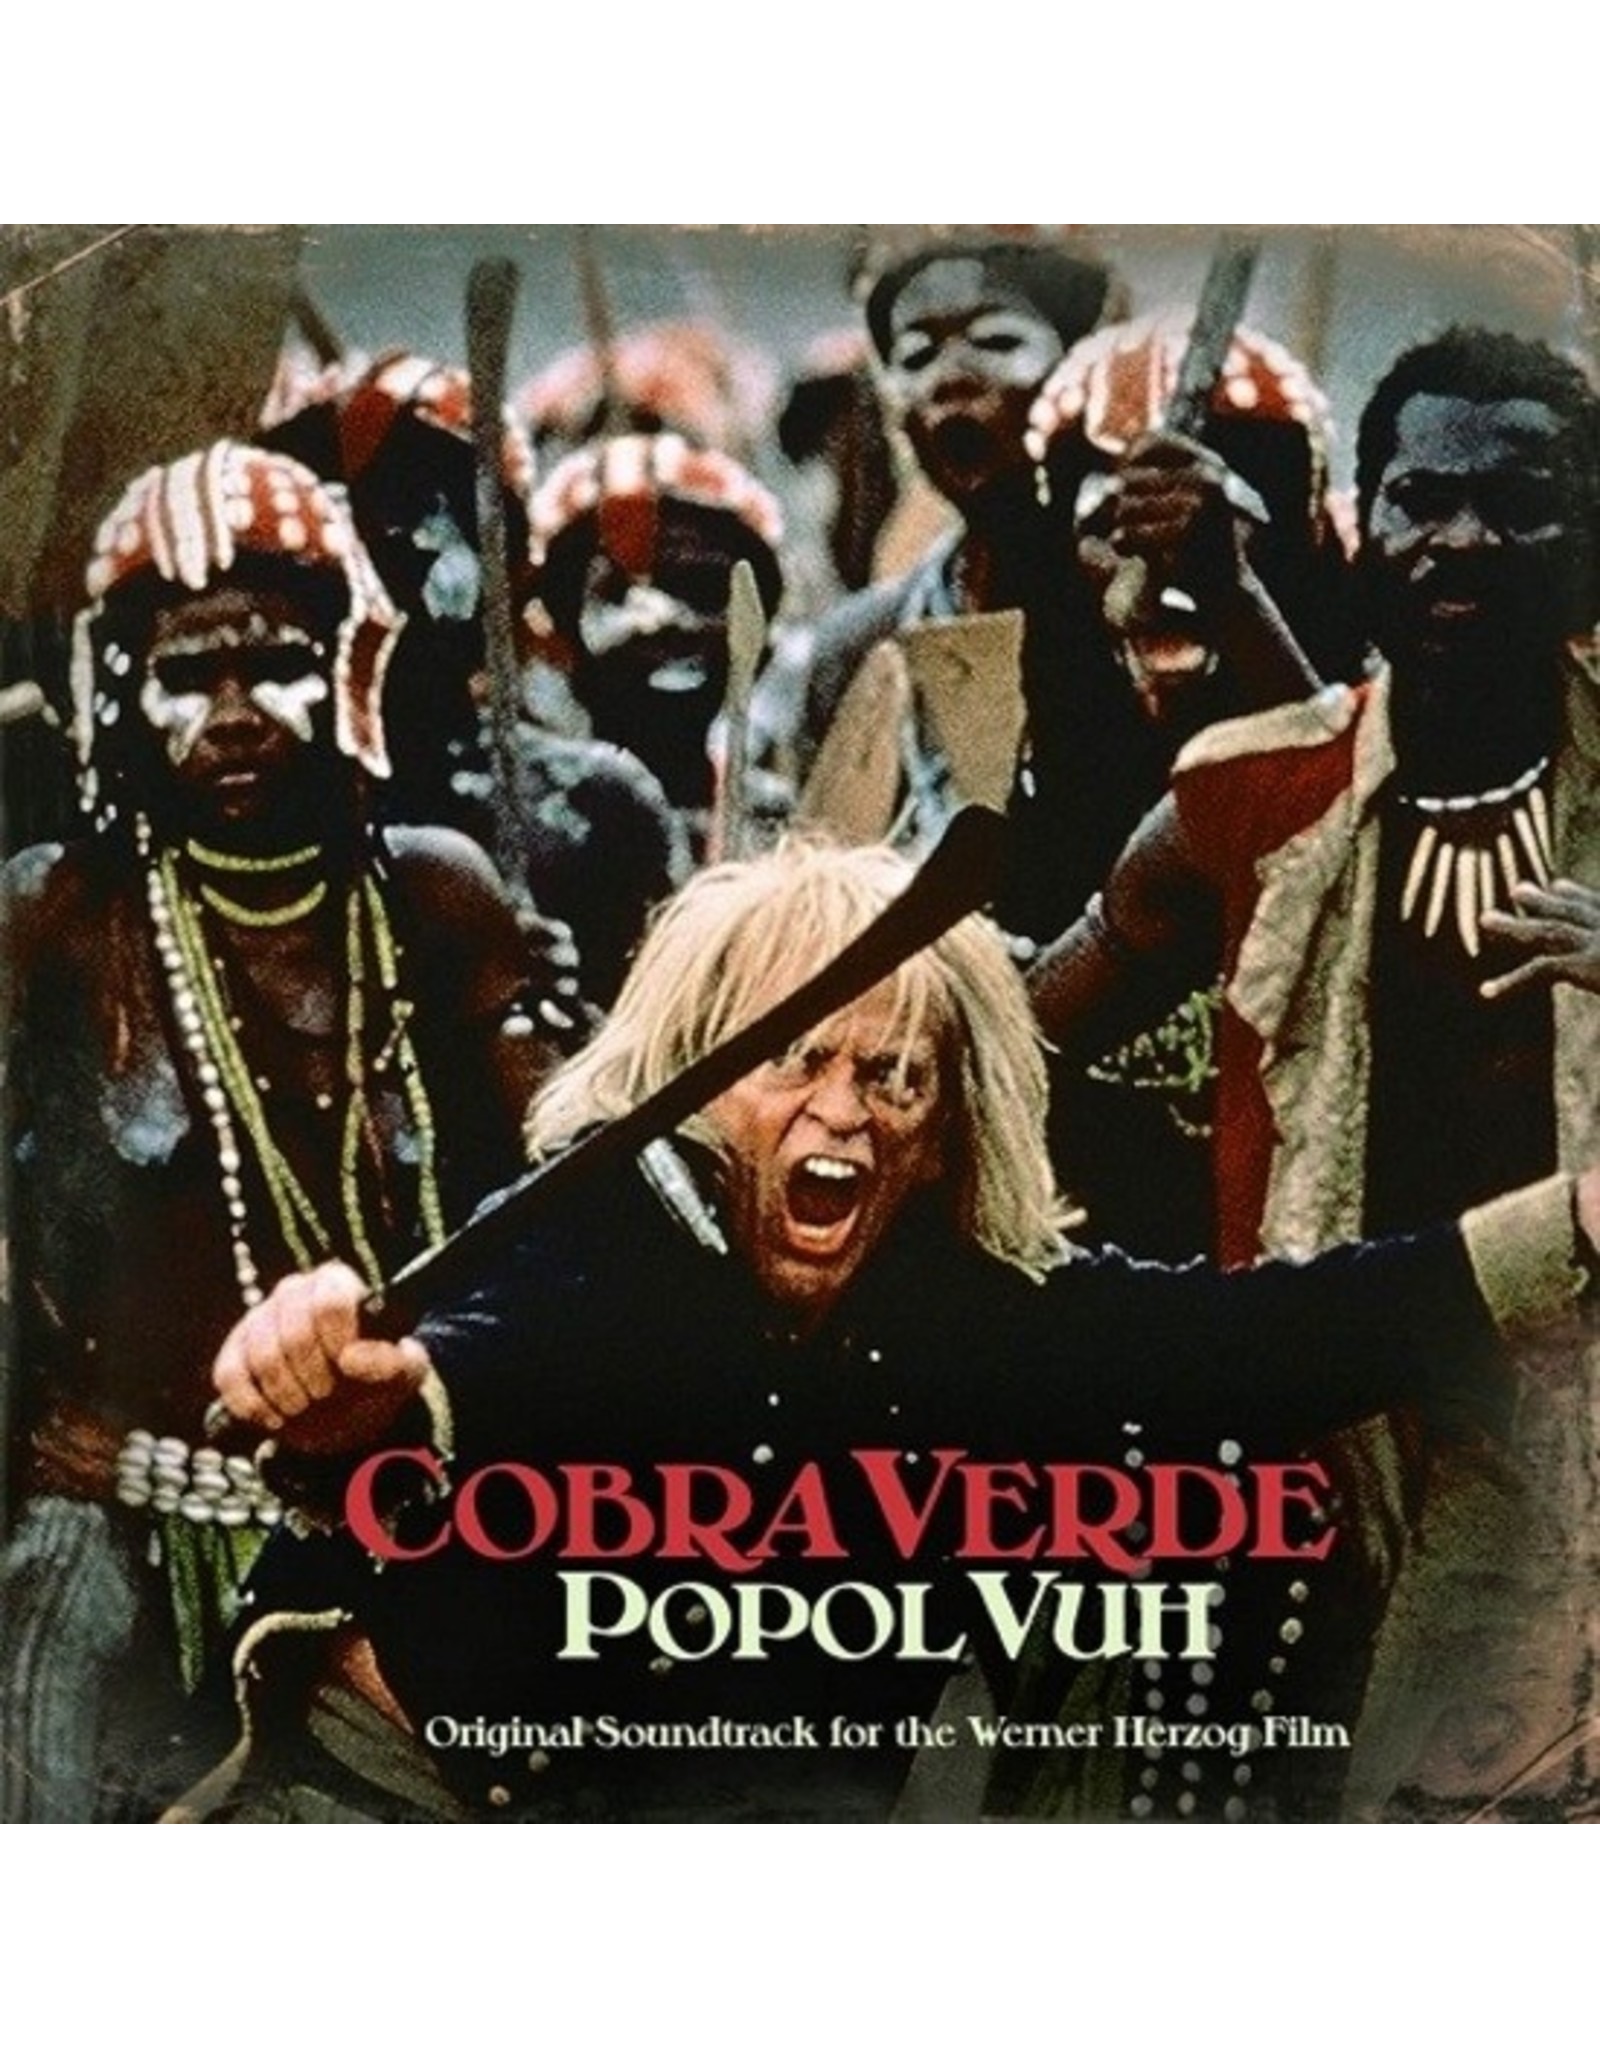 One Way Static Popol Vuh: Cobra Verde LP